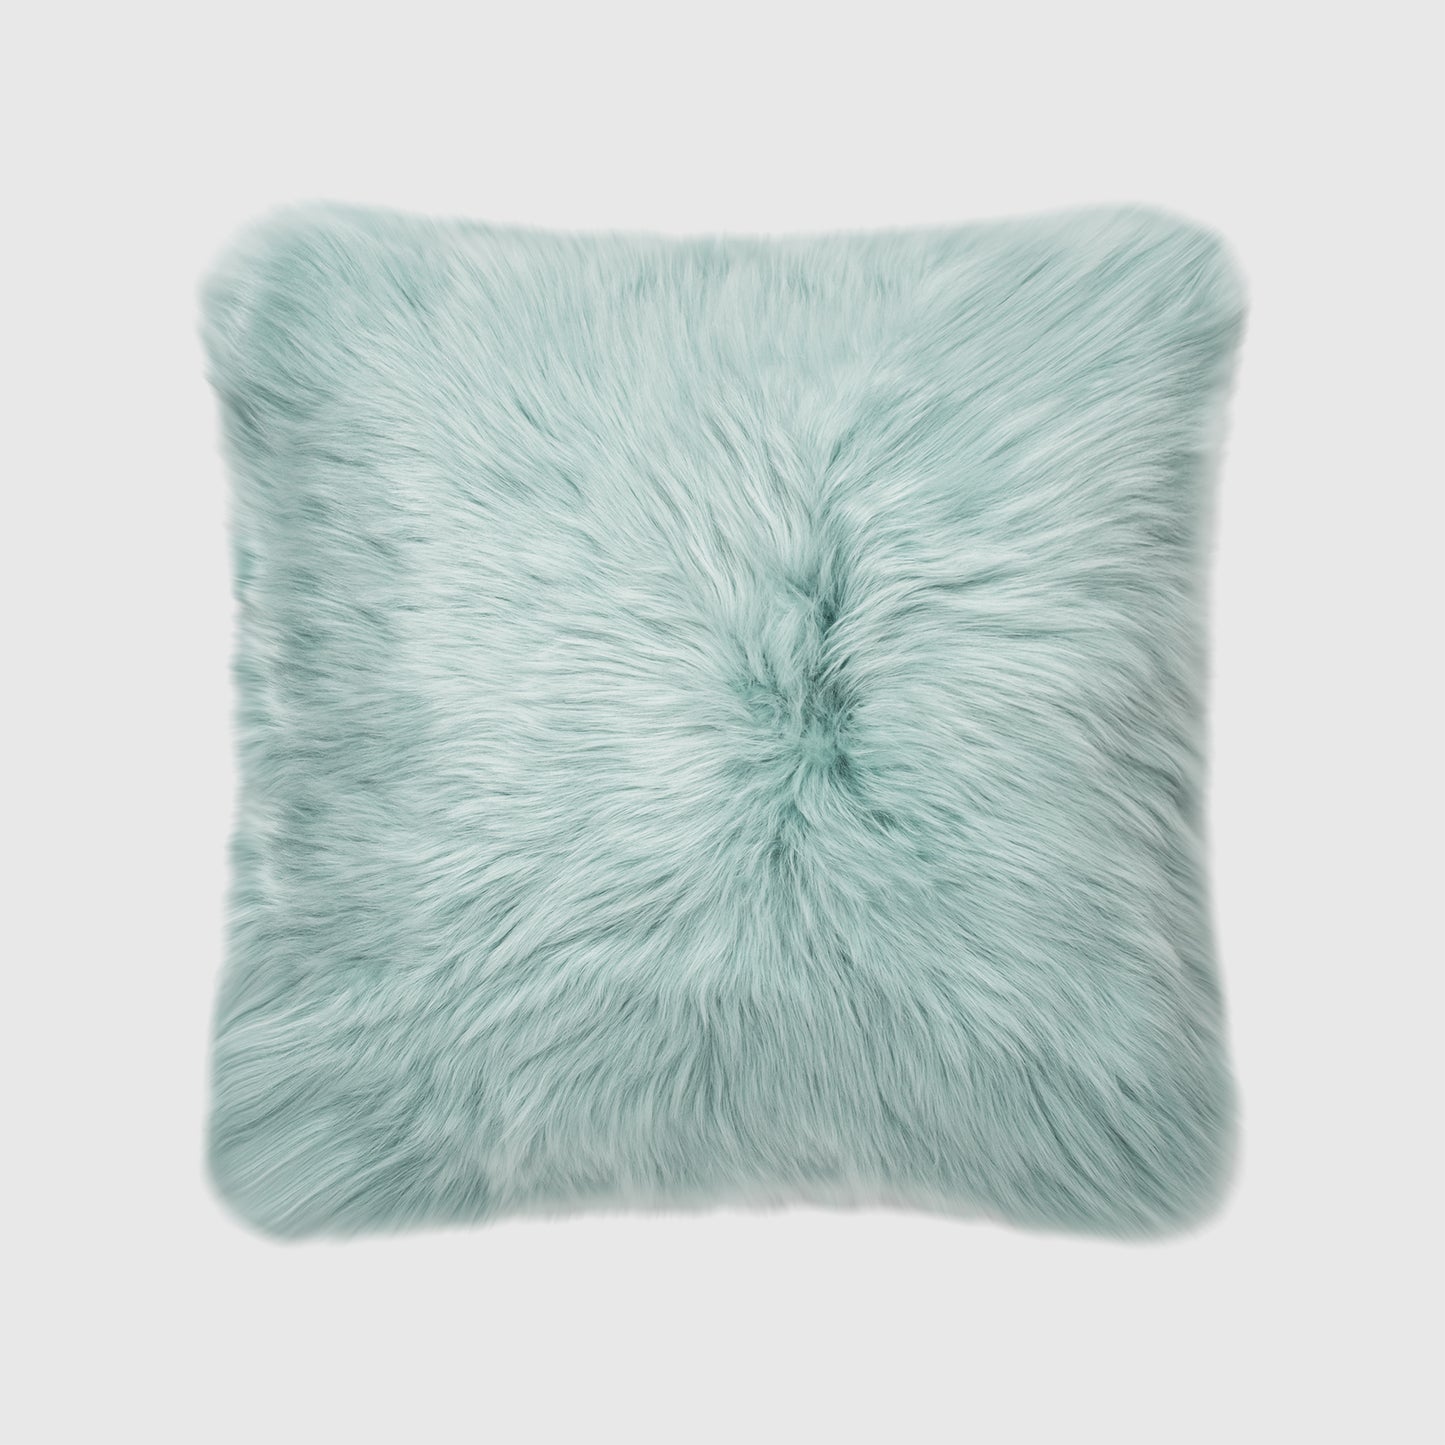 The Mood | Charlie Sheepskin Double-sided 18"x18" Pillow, Eggshell Blue